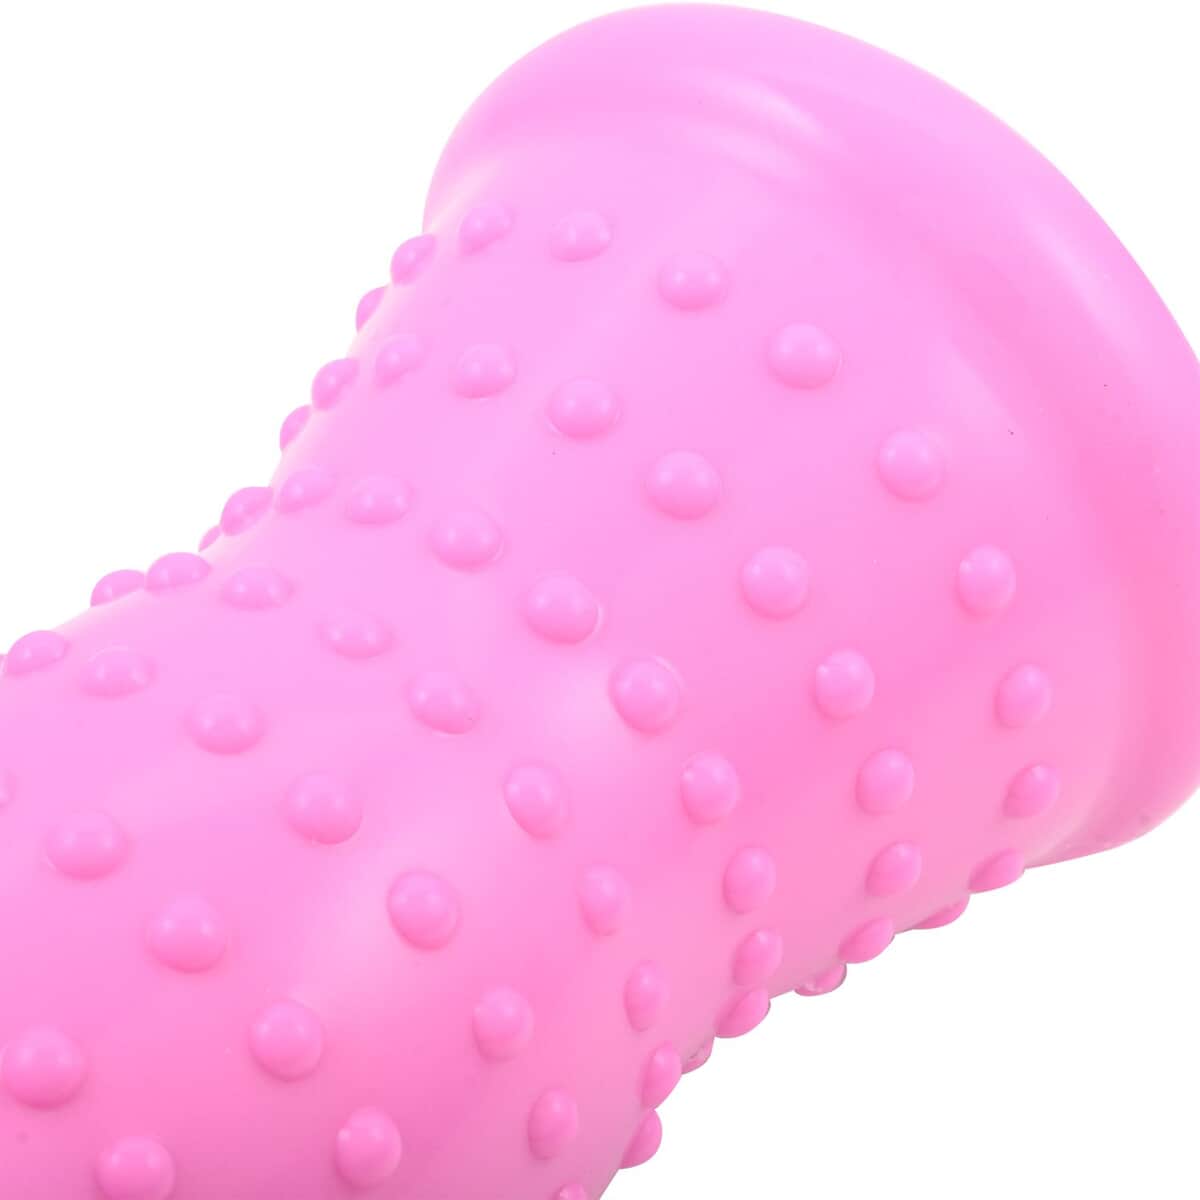 Swift Fit Hot & Cold Foot Massage Roller - Pink image number 3